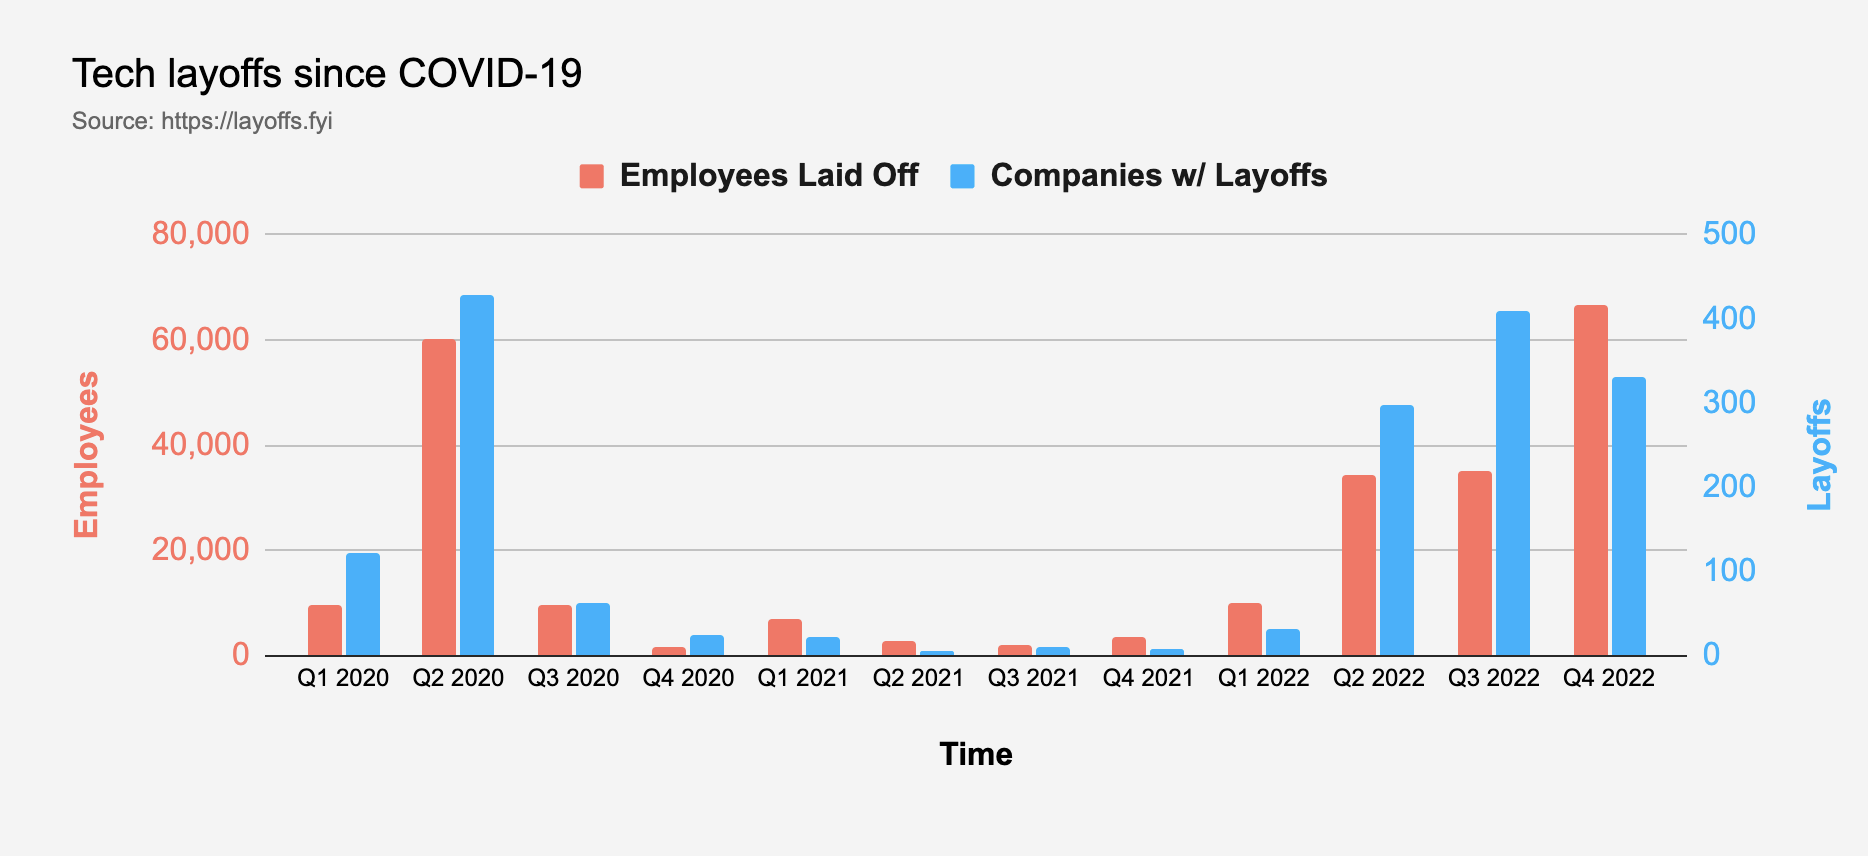 Tech layoffs since COVID-19